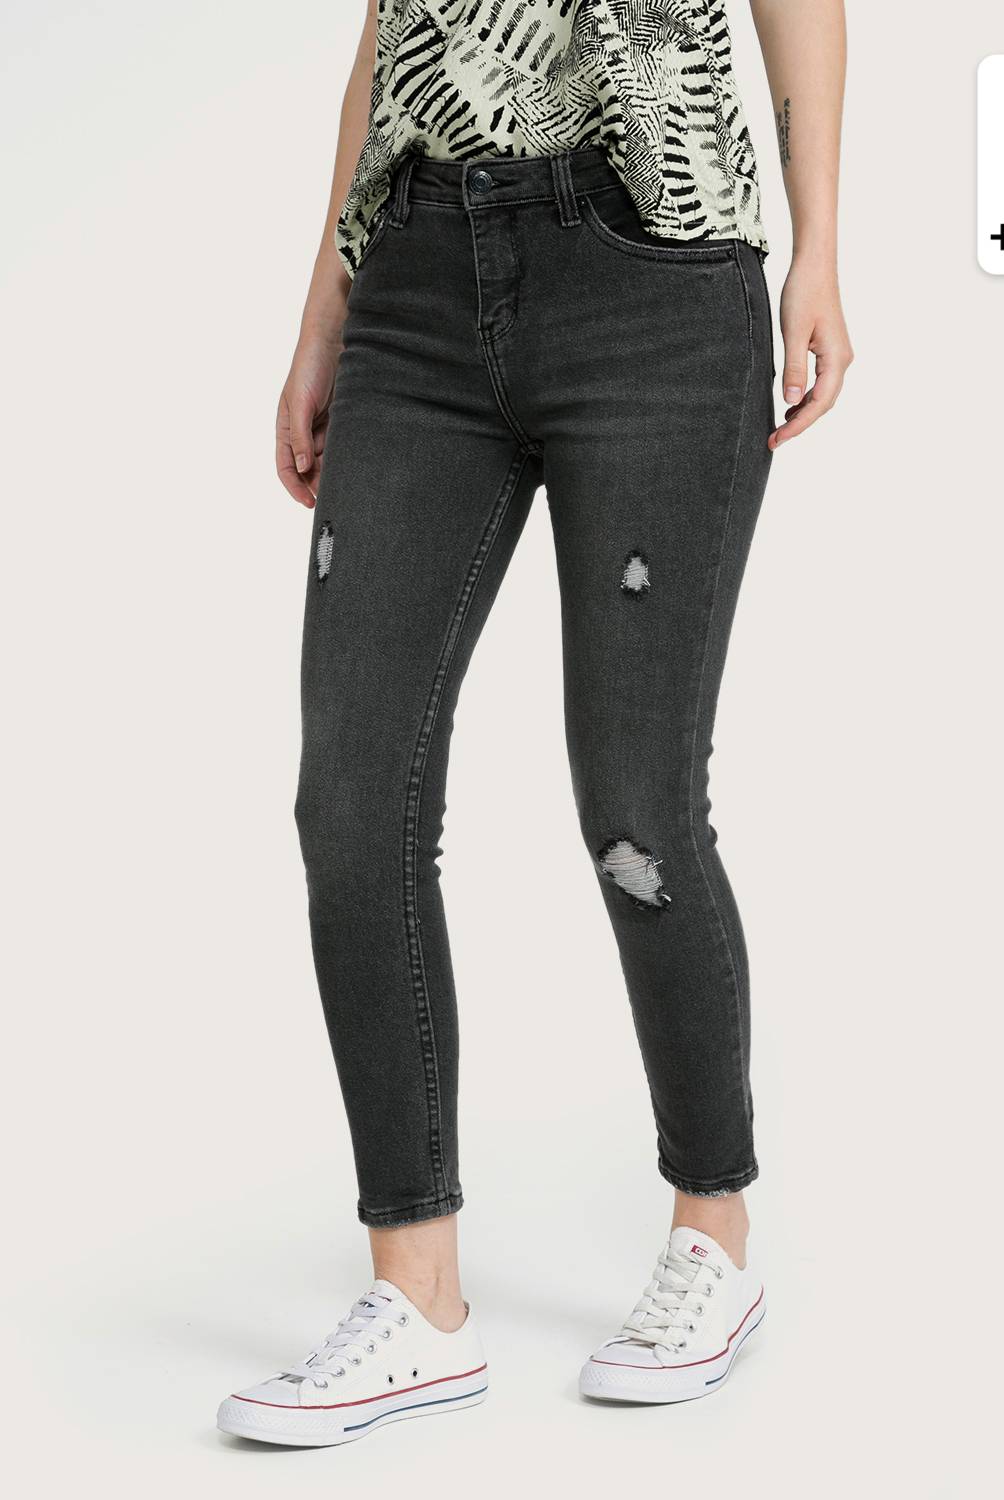 AMERICANINO - Jeans Skinny Mujer